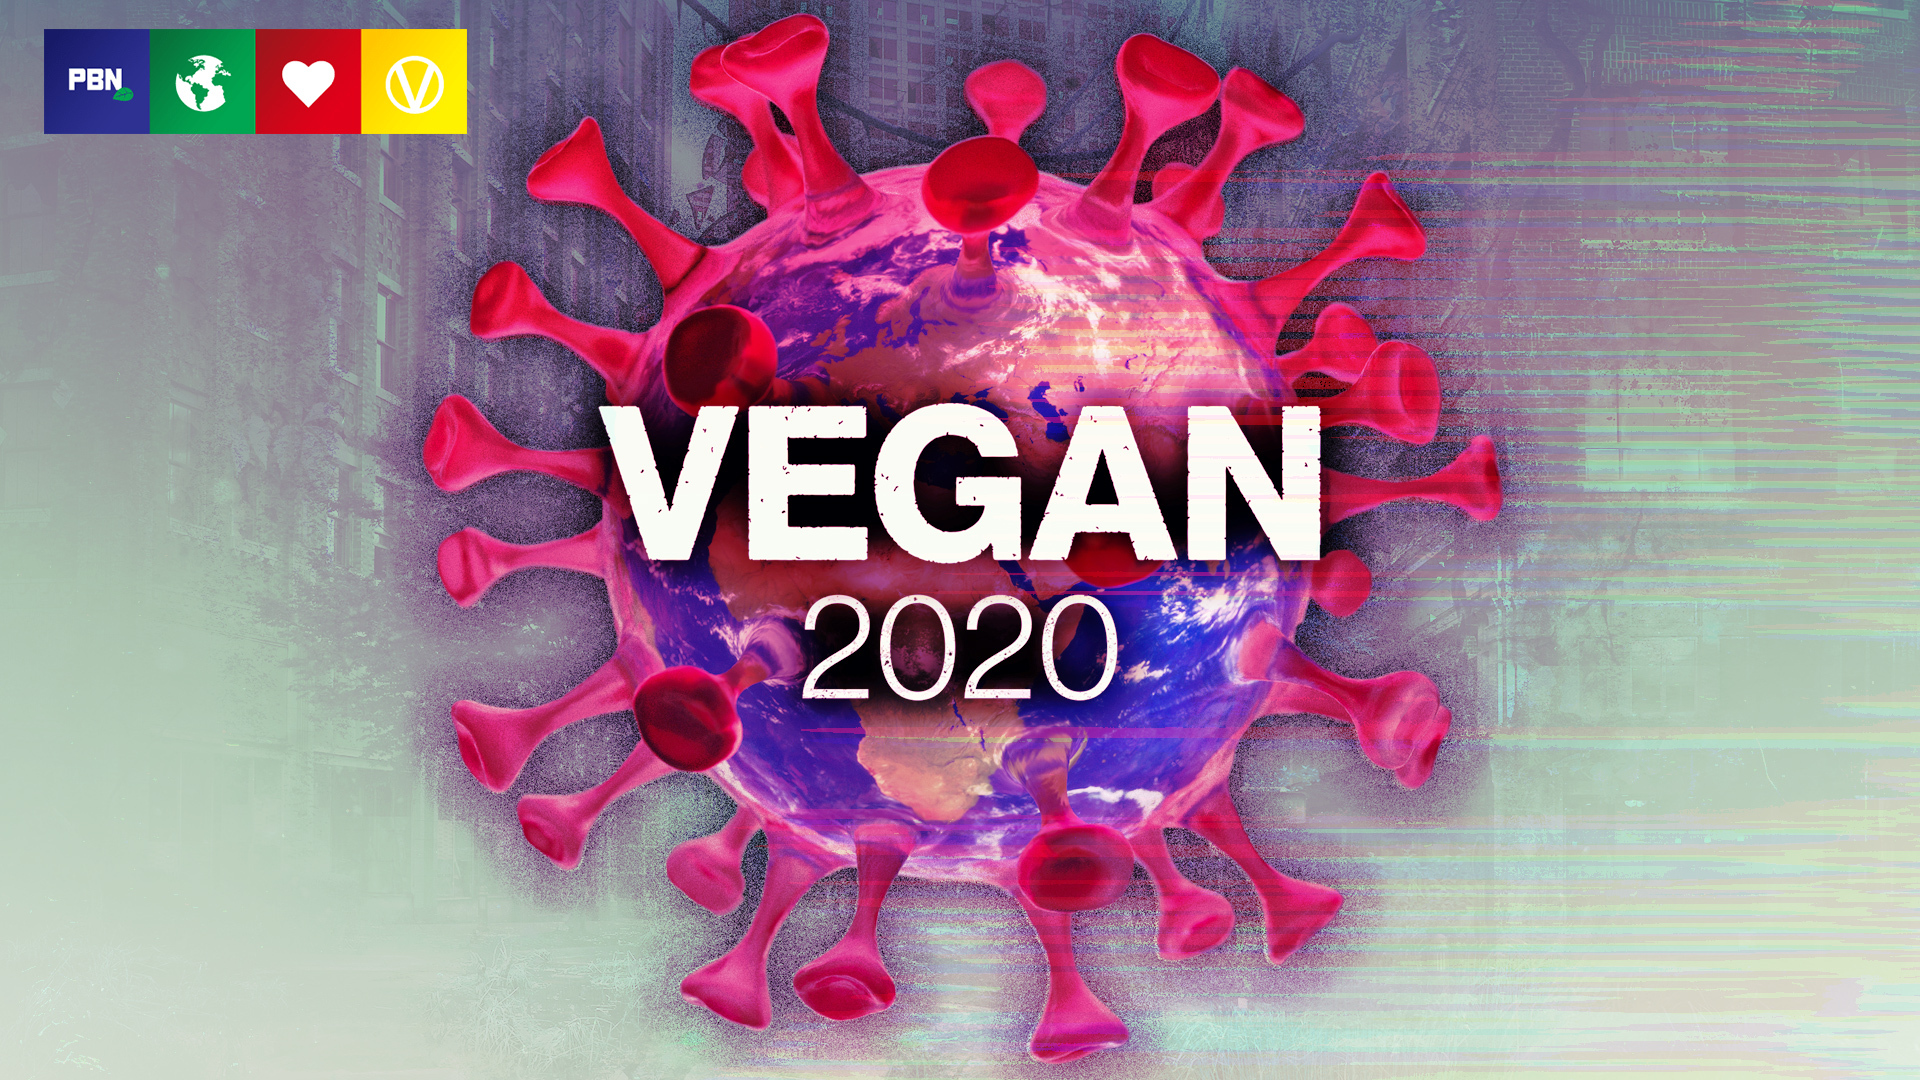 Vegan 2020